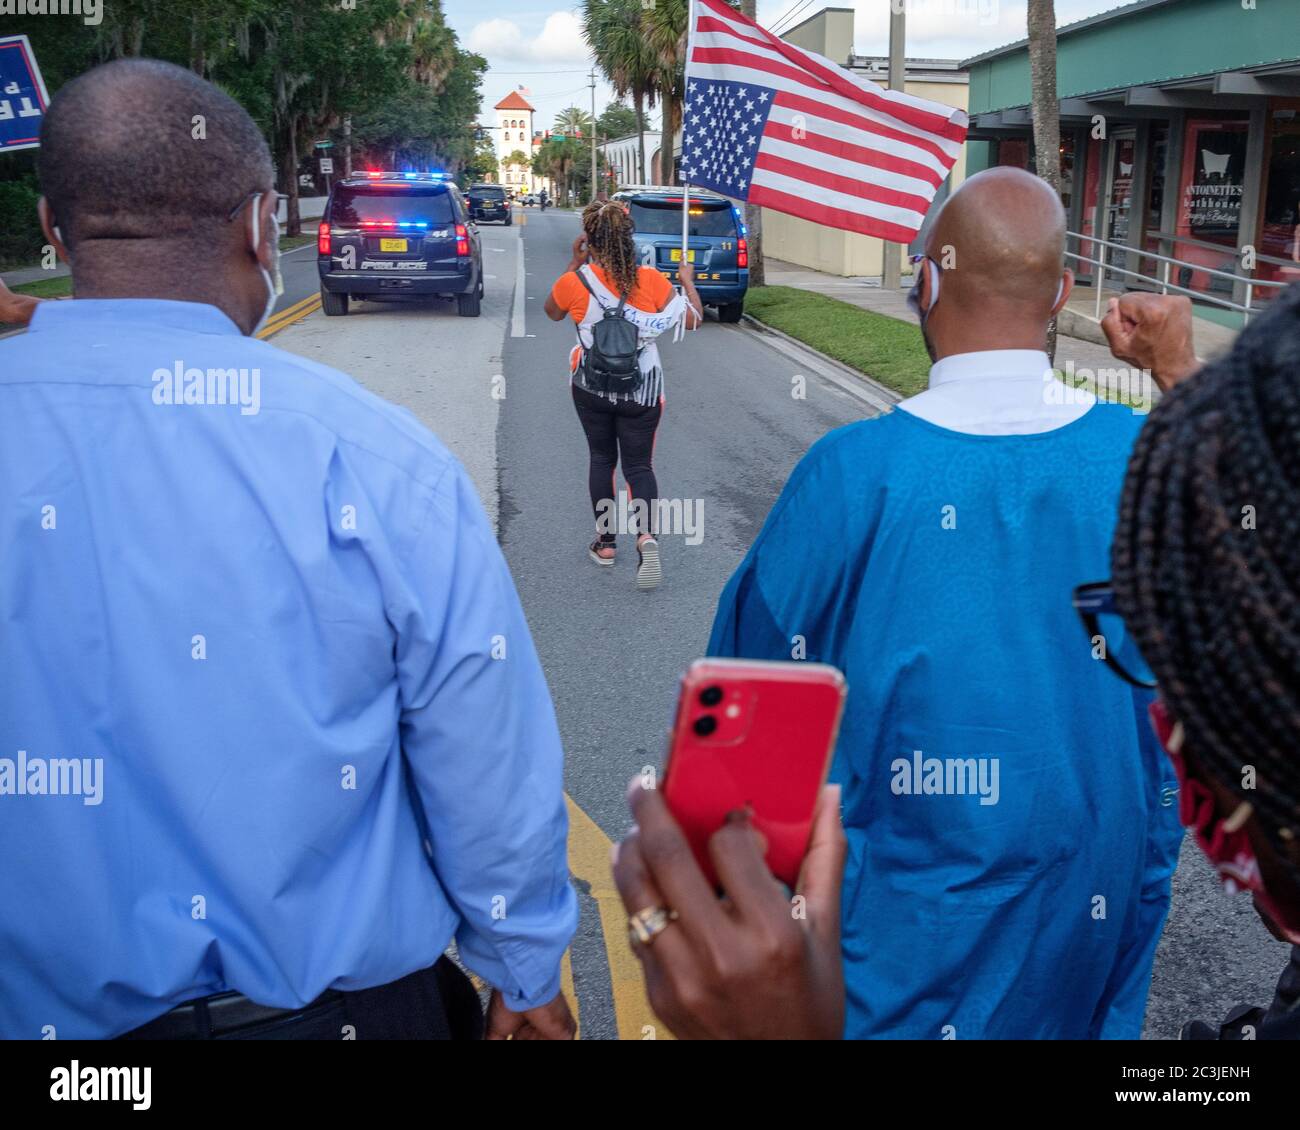 Black Lives Matter rally. St. Augustine, Florida Stock Photo